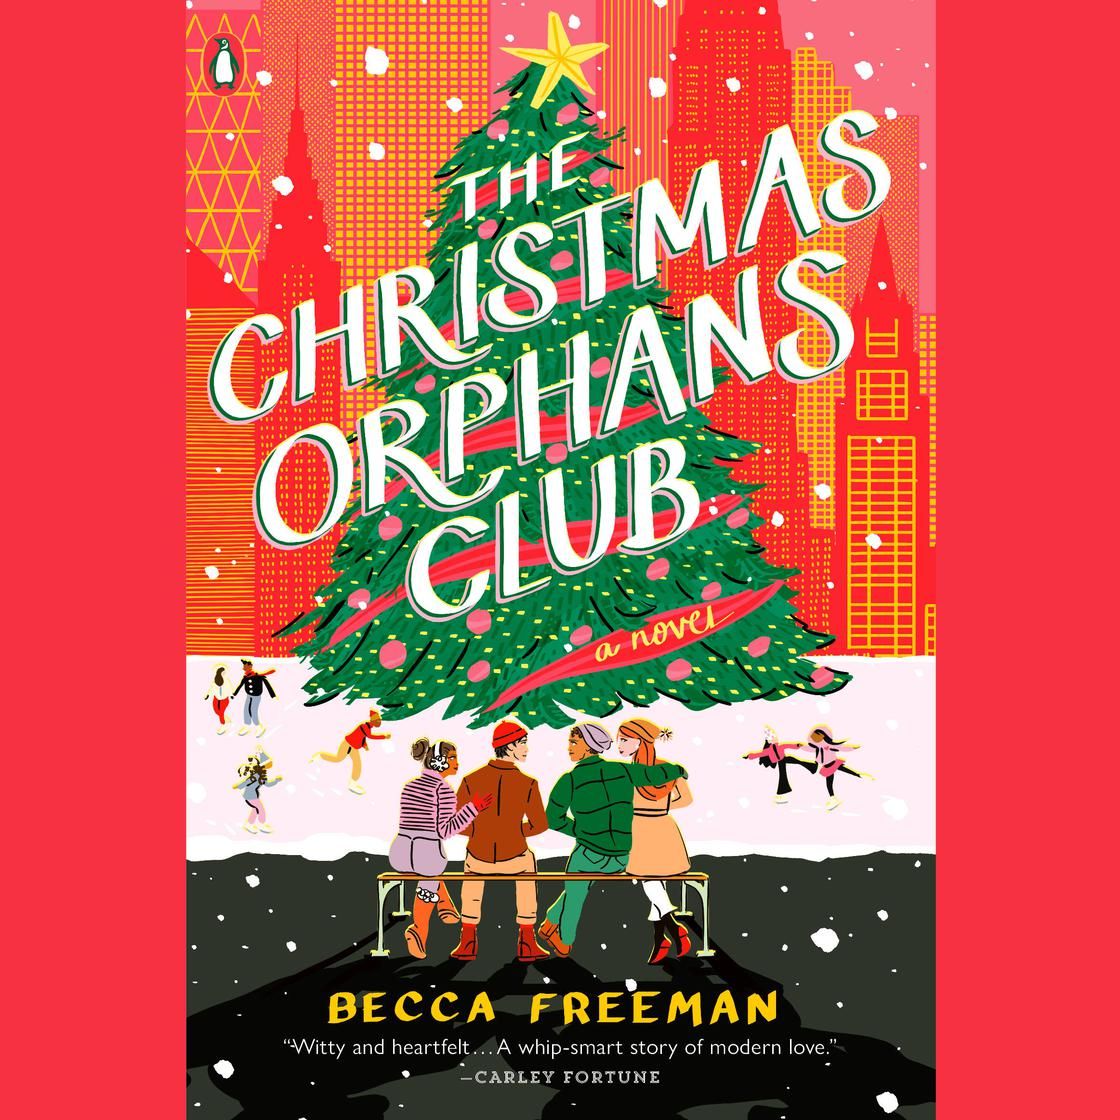 The Christmas Orphans Club | Libro.fm (US)